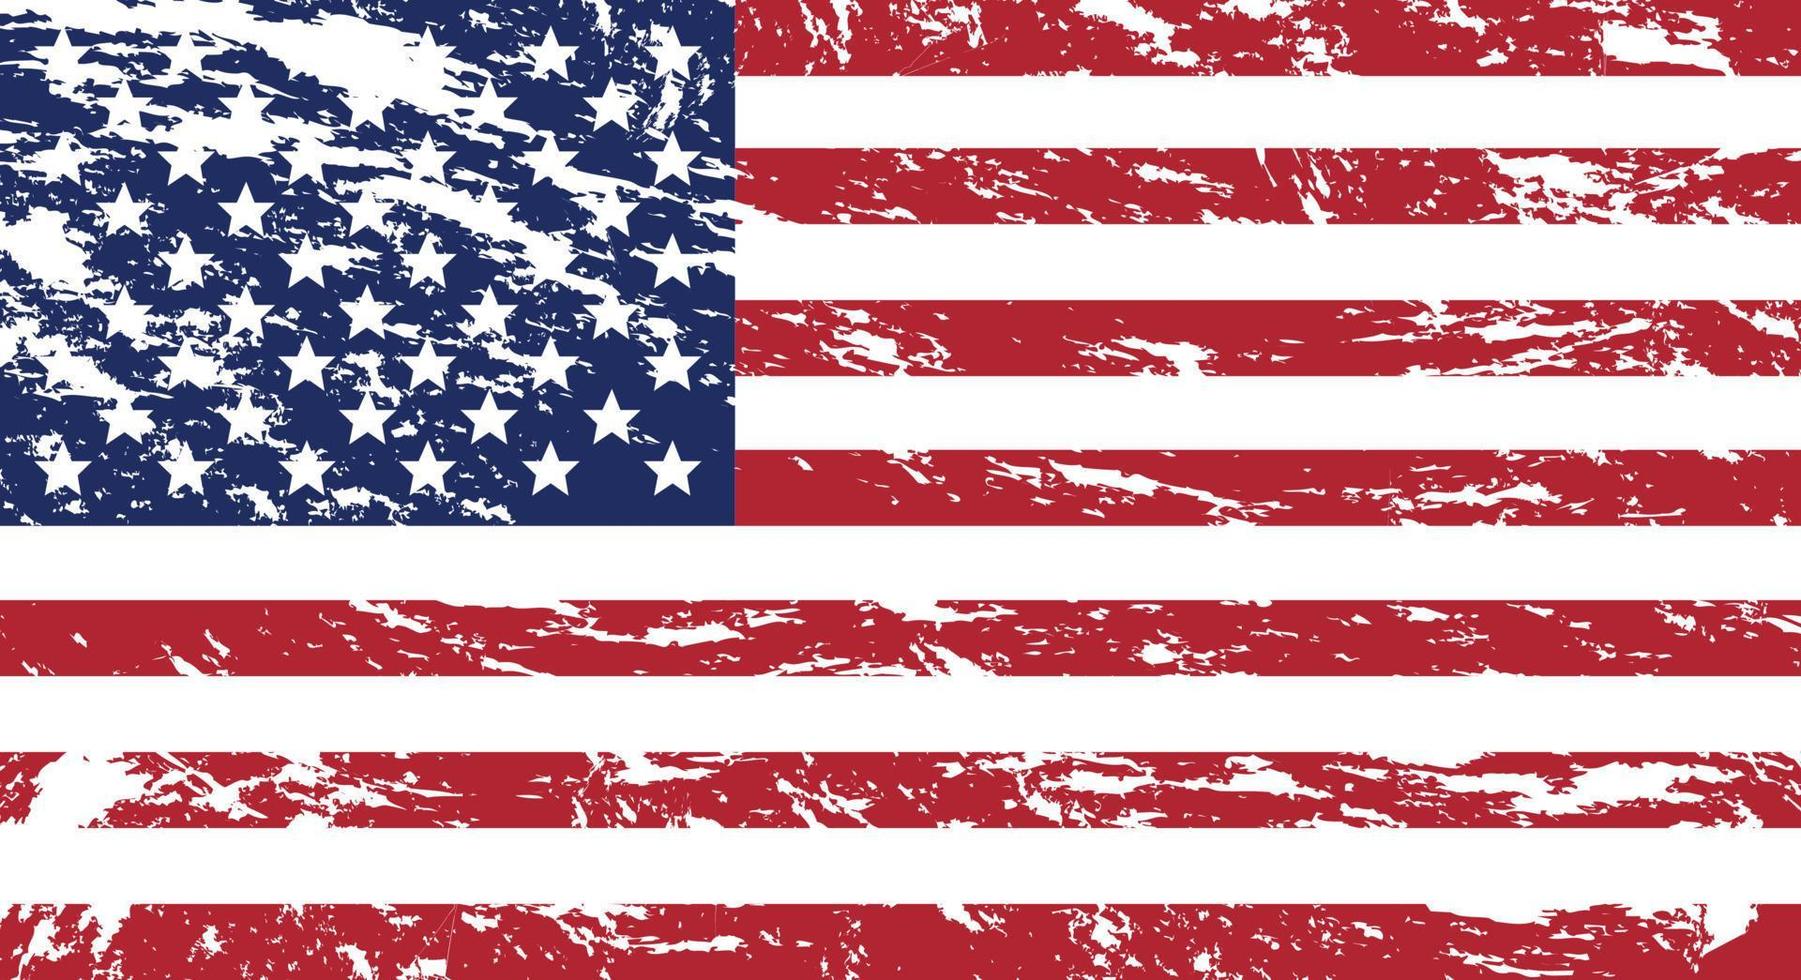 vlag van de vs in grunge-stijl. penseelstreek usa flag.old vuile Amerikaanse vlag. Amerikaans symbool. raster illustratie vector